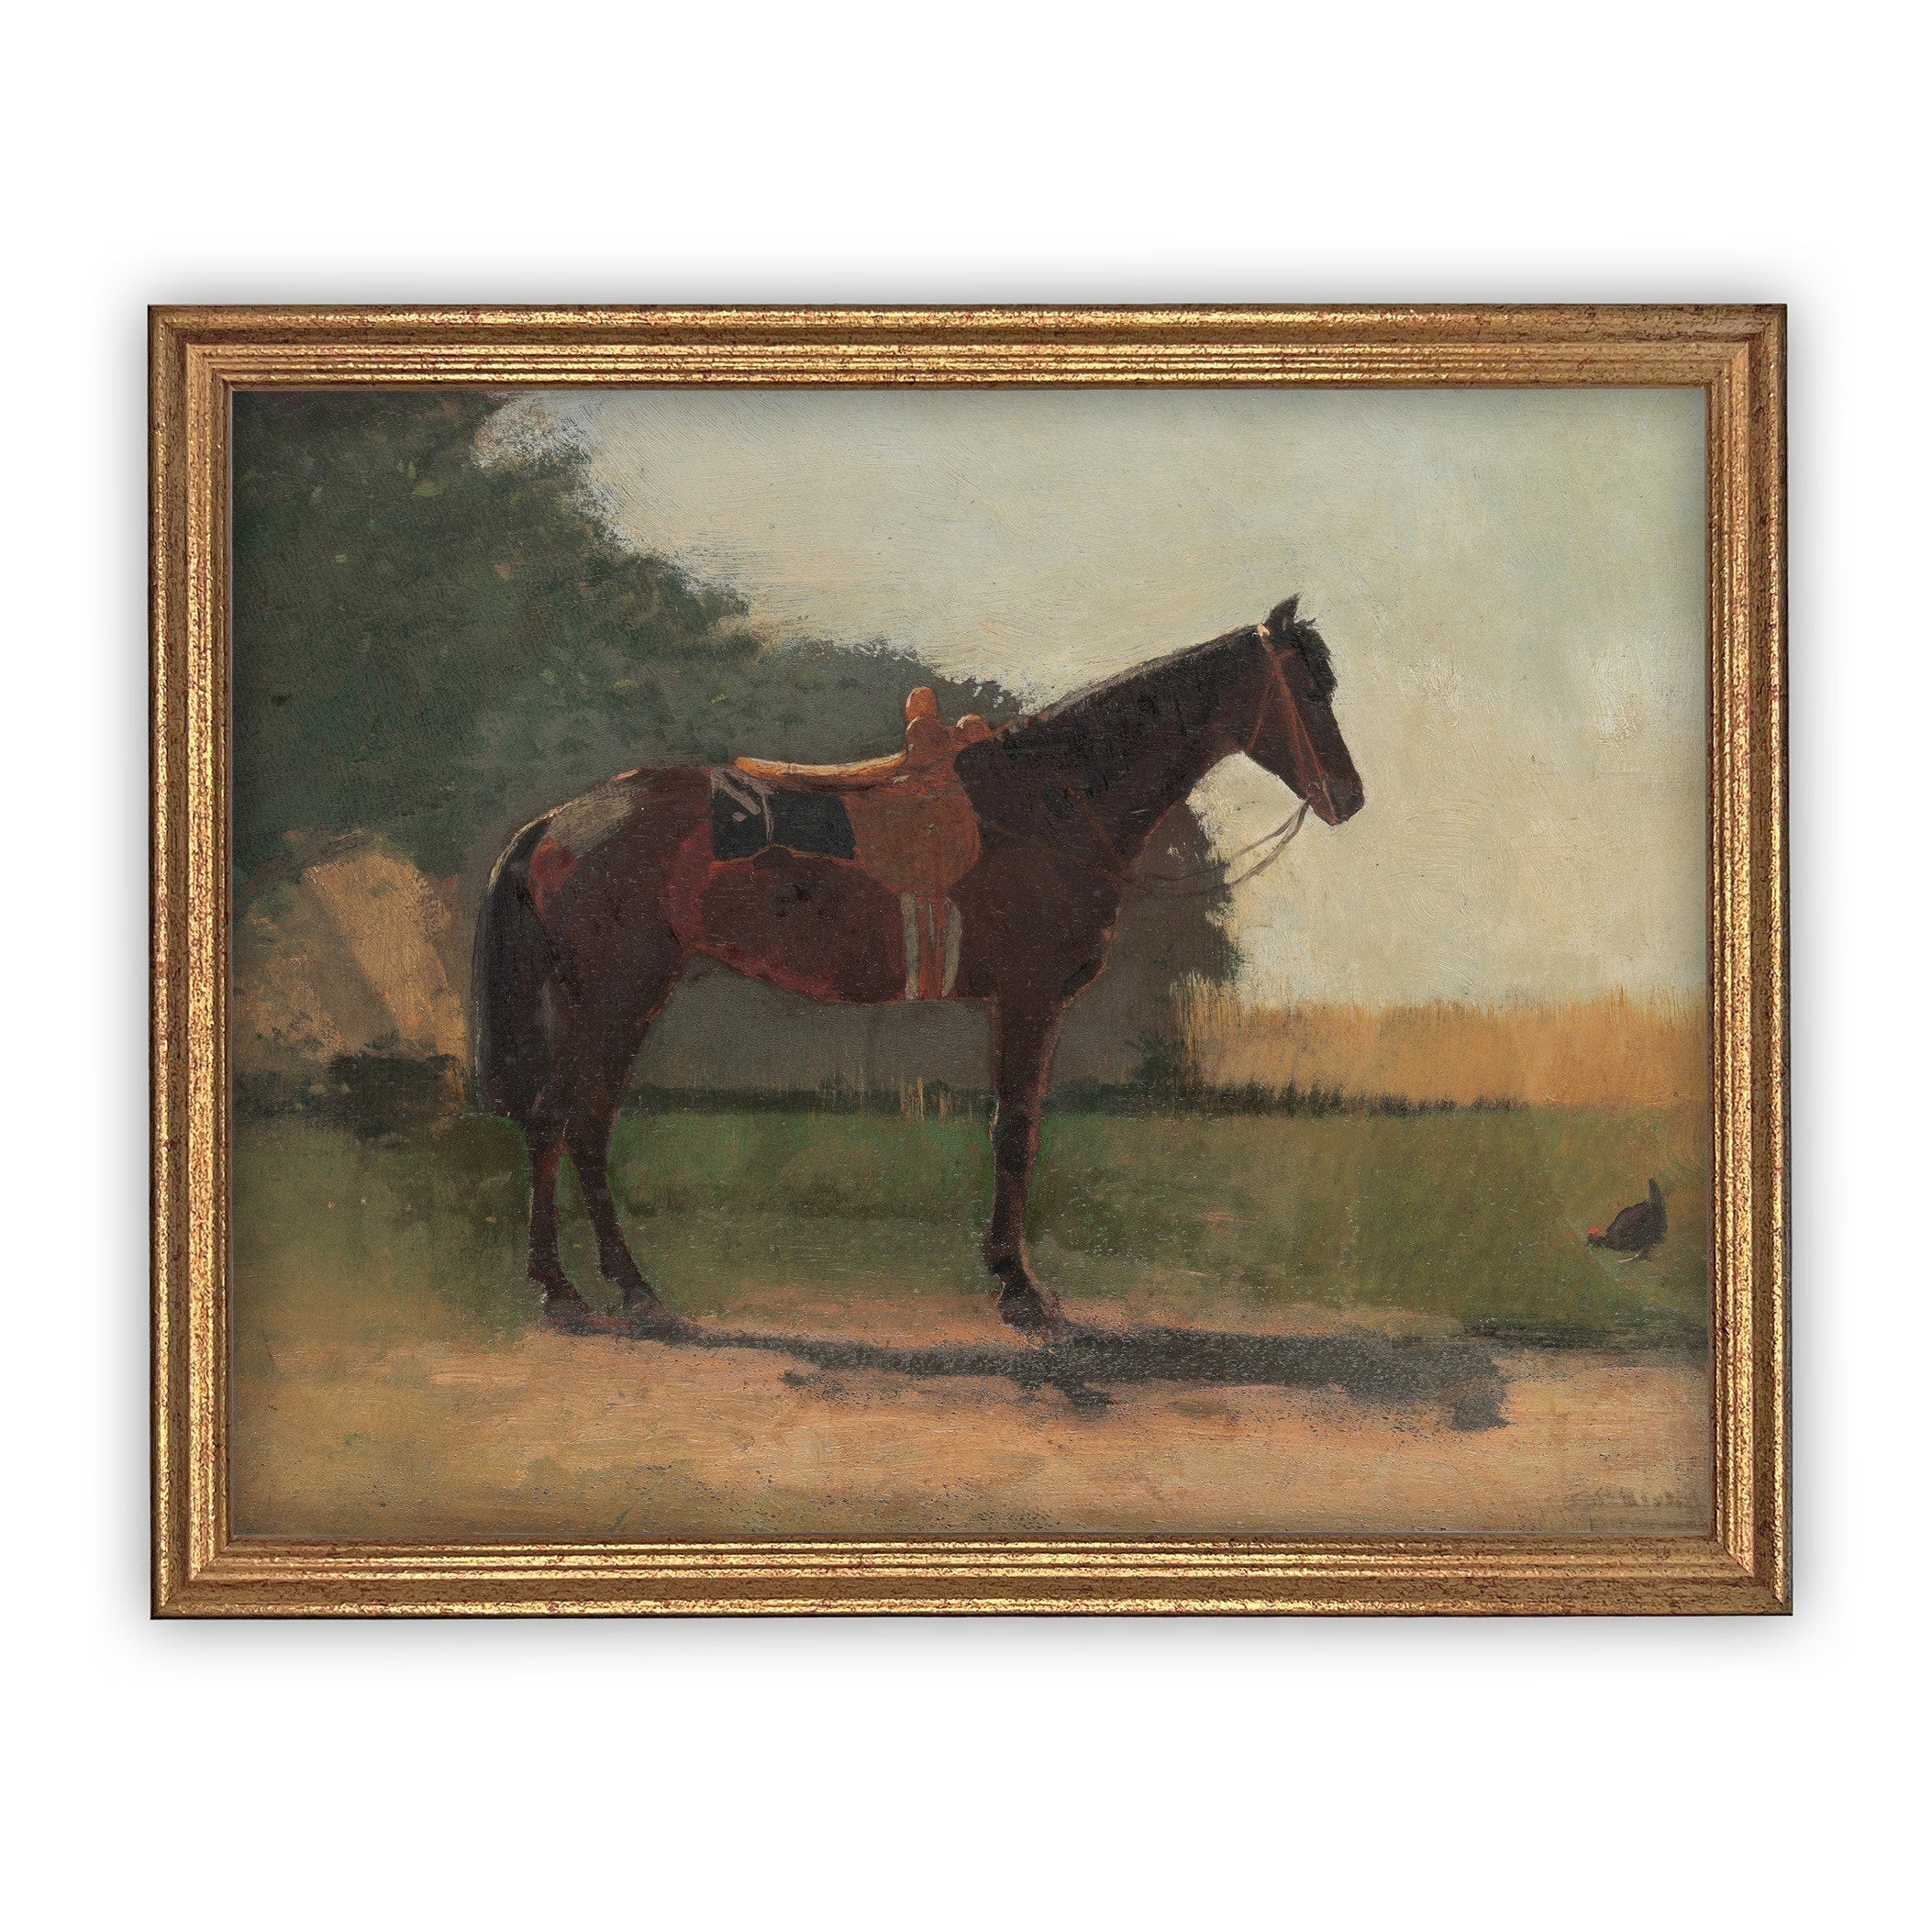 16x20 Canvas Frame -  Ireland